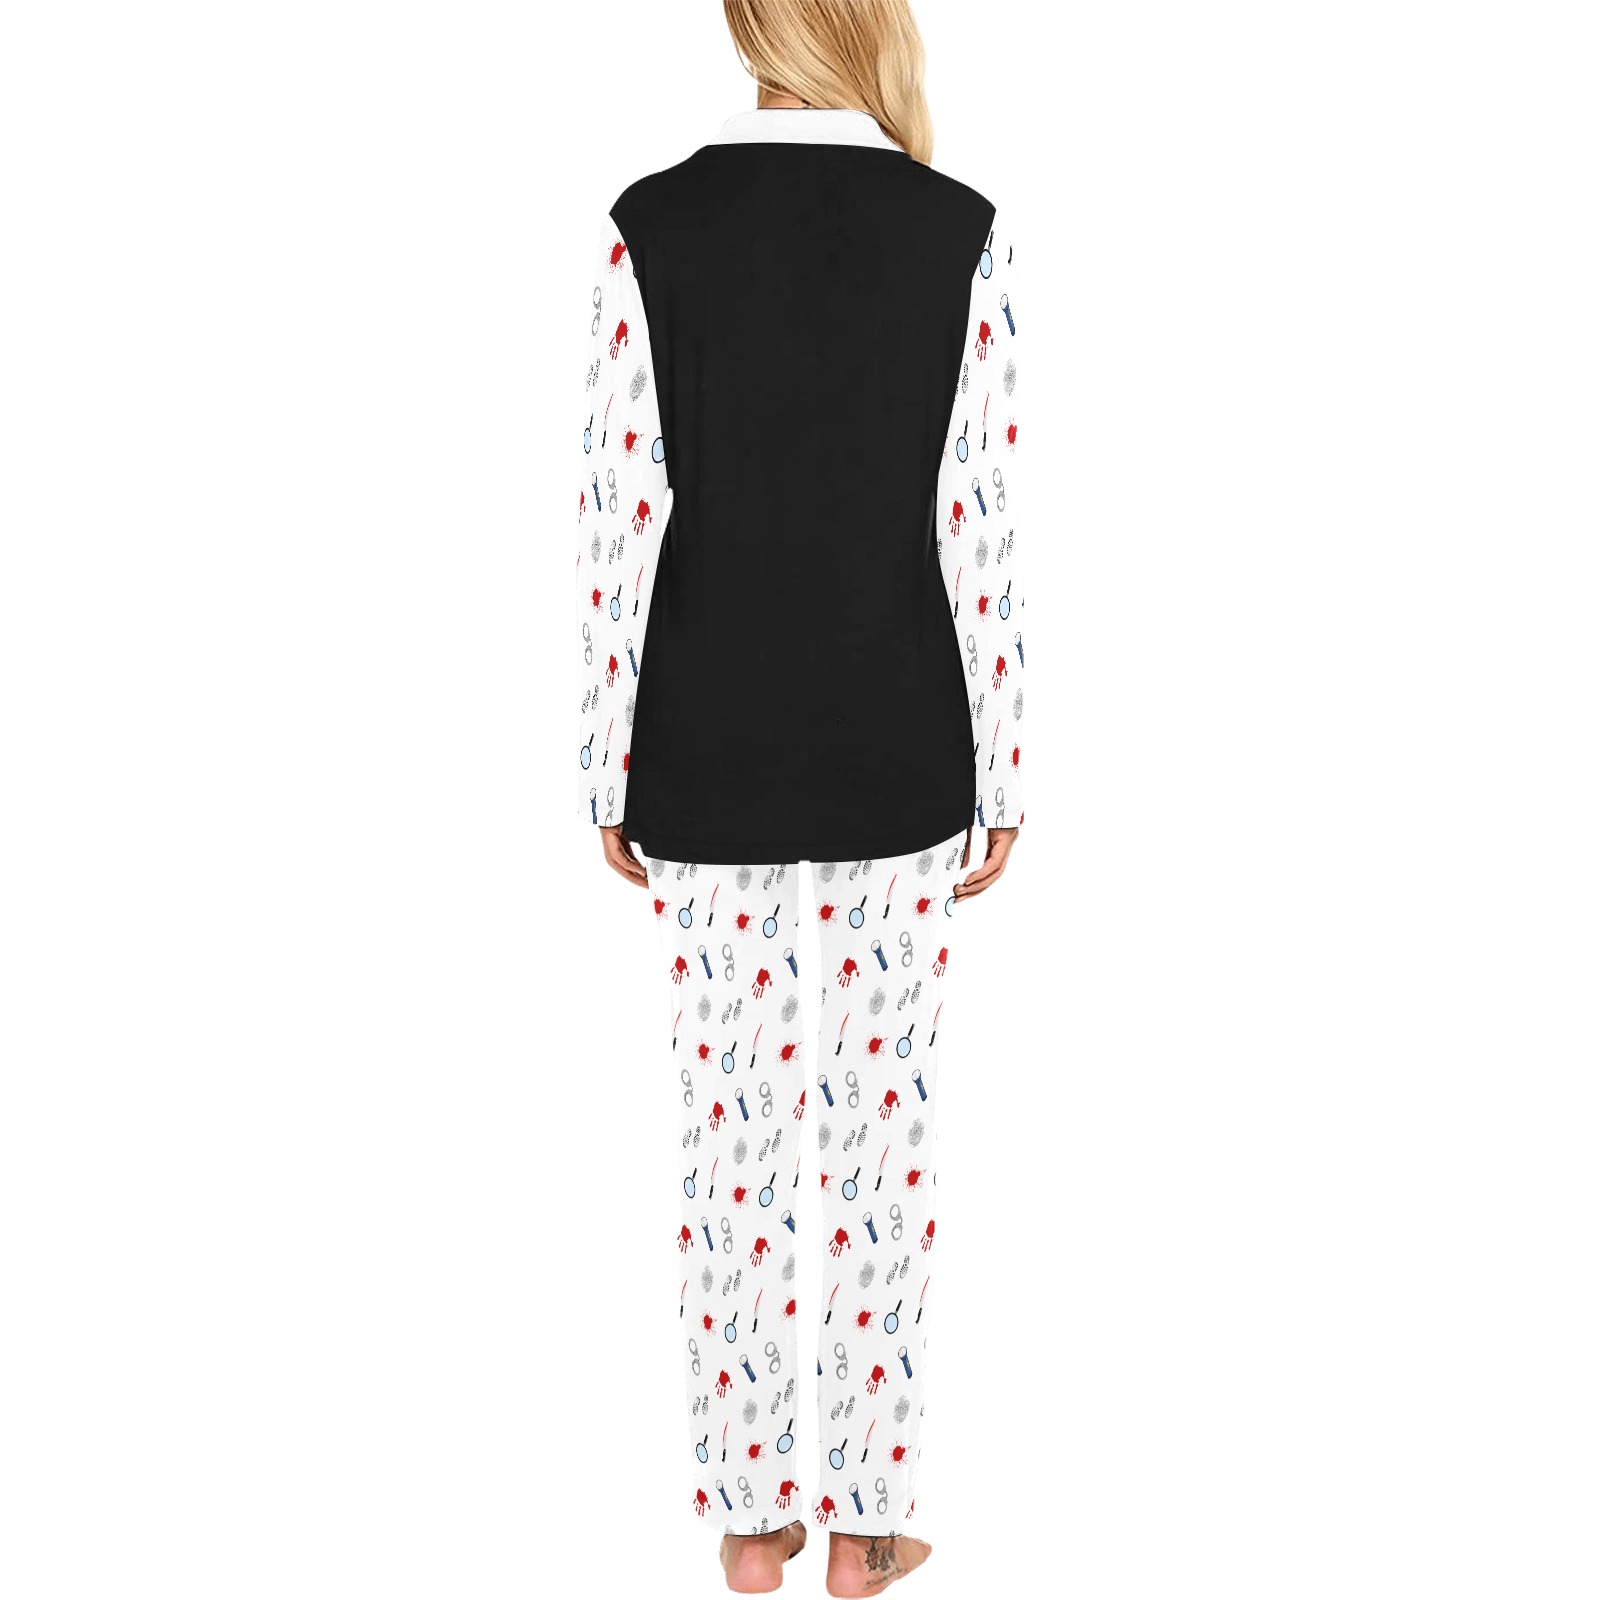 True Crime Junkie Jammies Women's Long Pajama Set